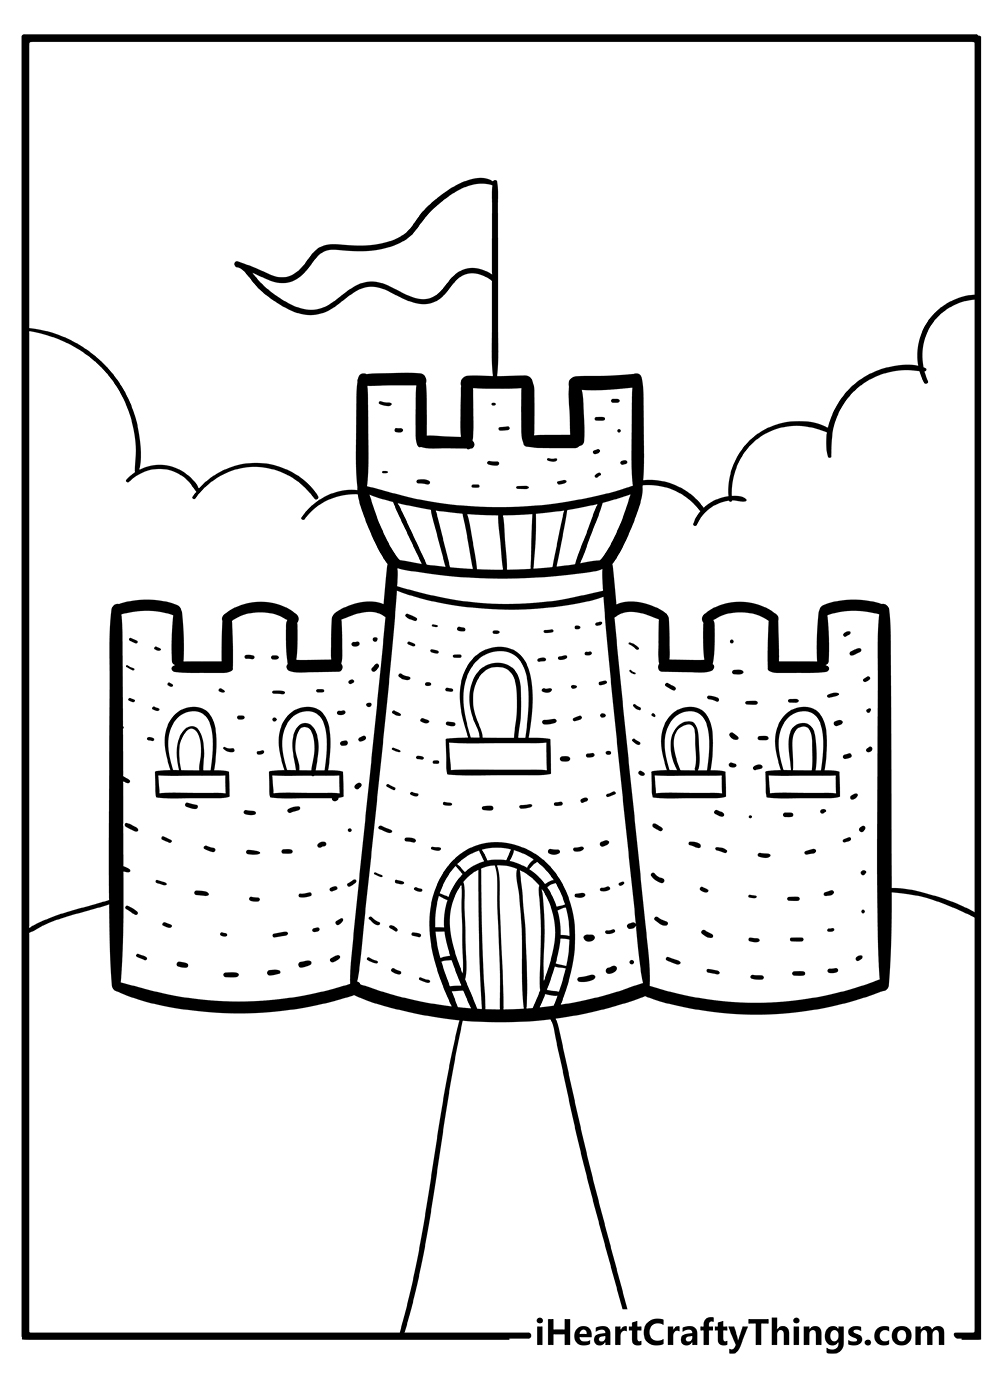 Castle Coloring Original Sheet for children free download